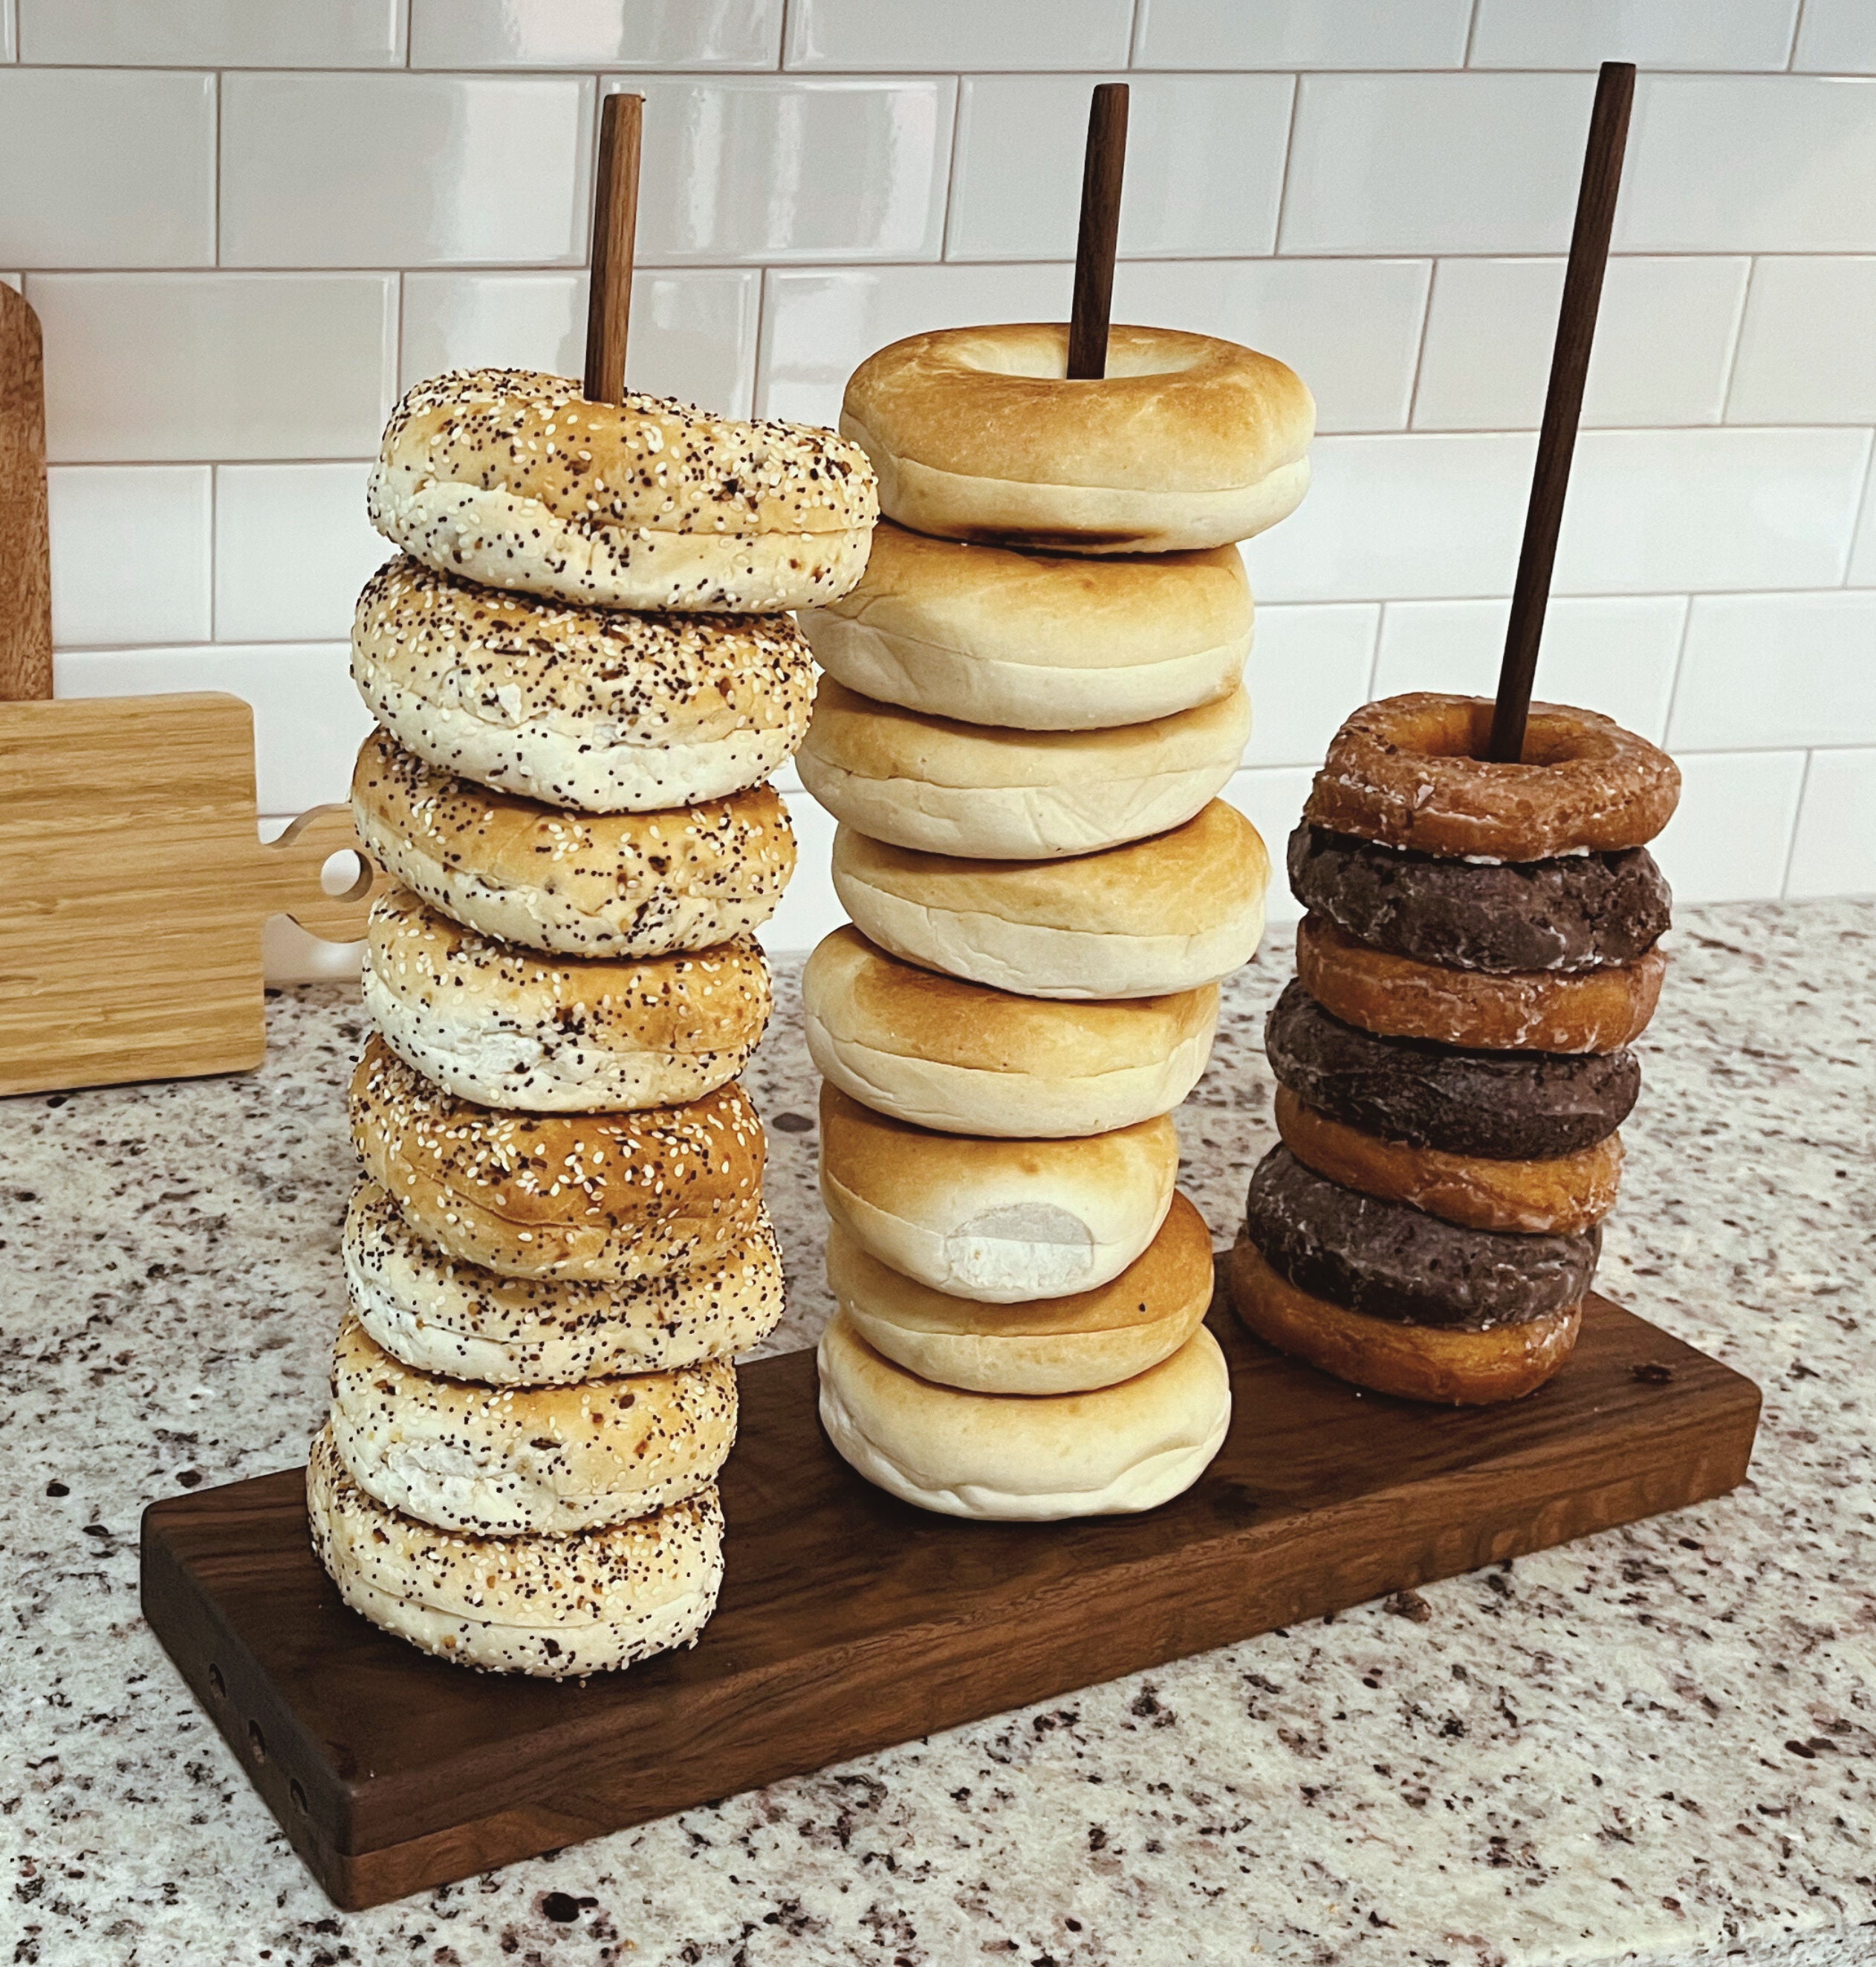 Bagel Maker Foodie Bread Bakery Food Jewish Sesame' Sticker